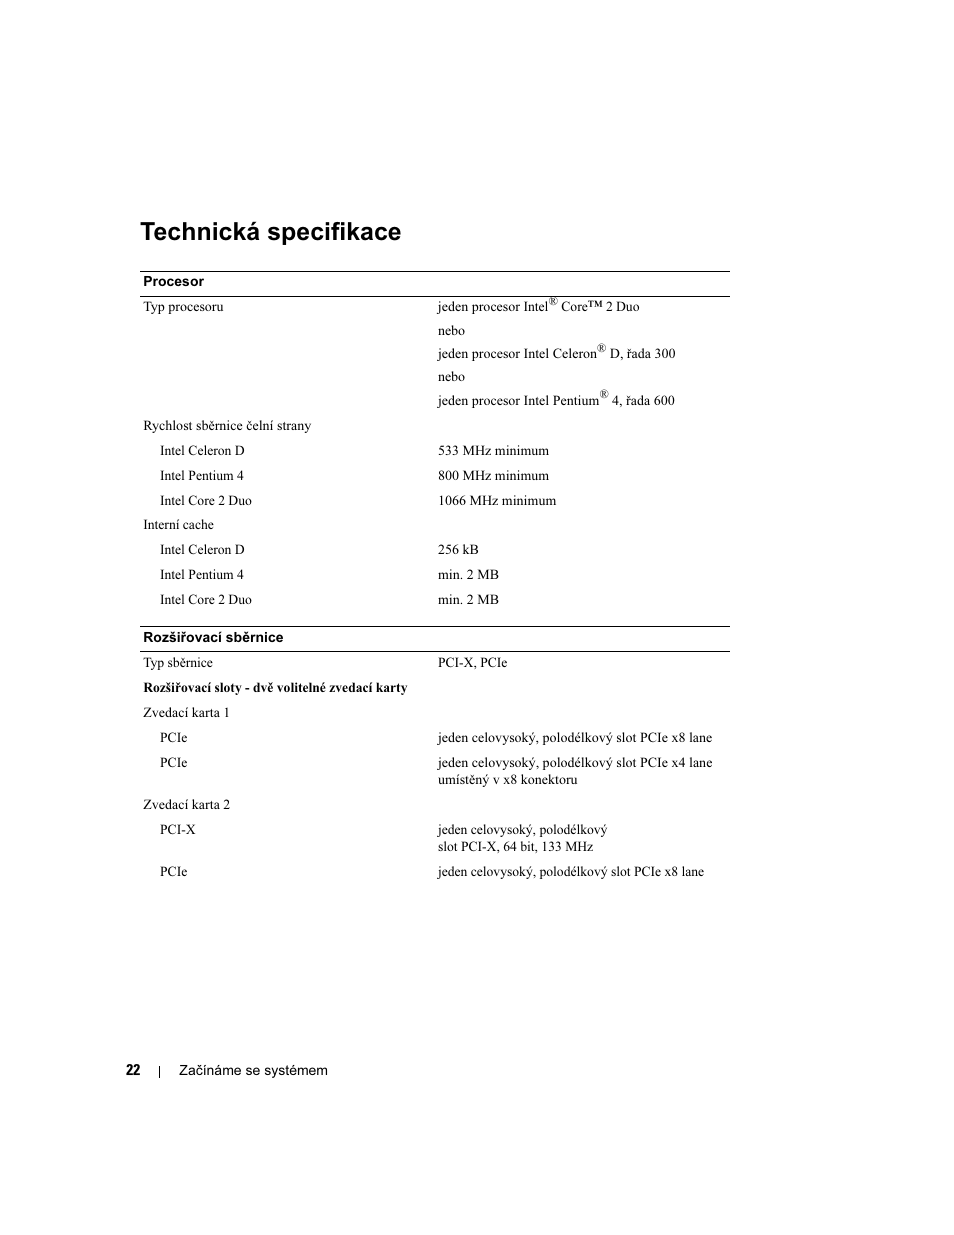 Technická specifikace | Dell PowerEdge 860 User Manual | Page 24 / 126 |  Original mode